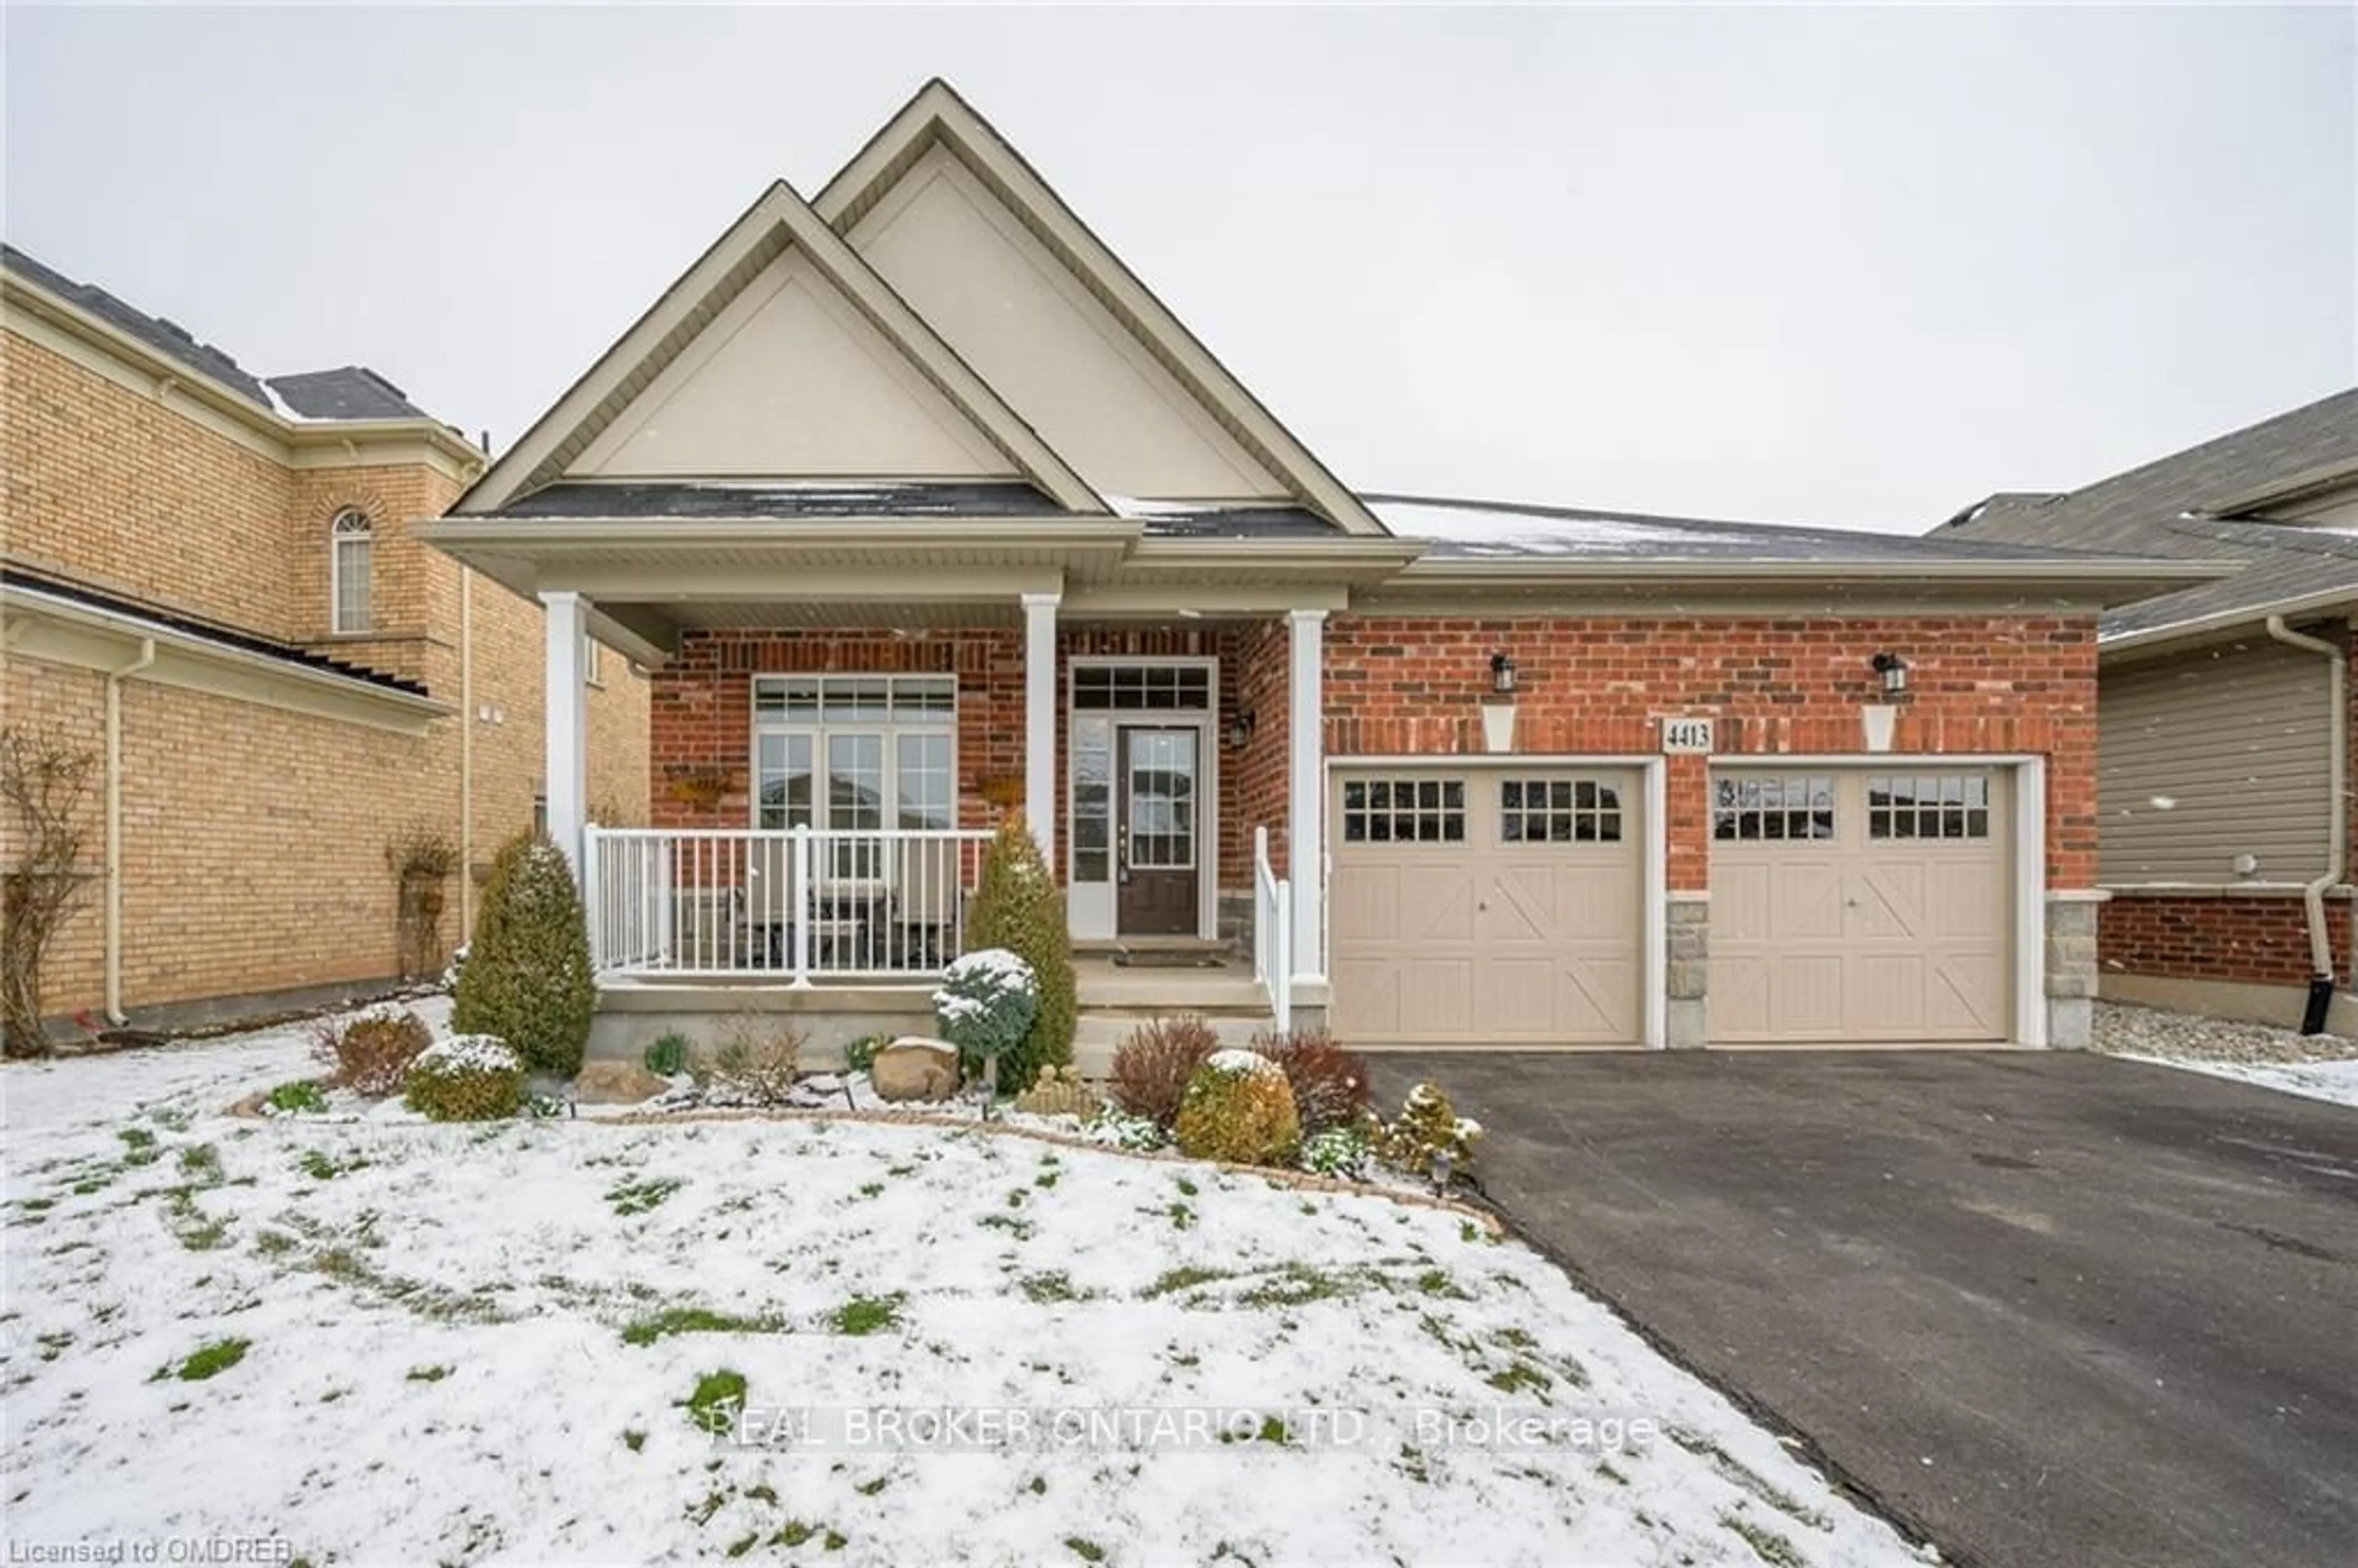 Home with brick exterior material for 4413 Mann St, Niagara Falls Ontario L2G 0E8